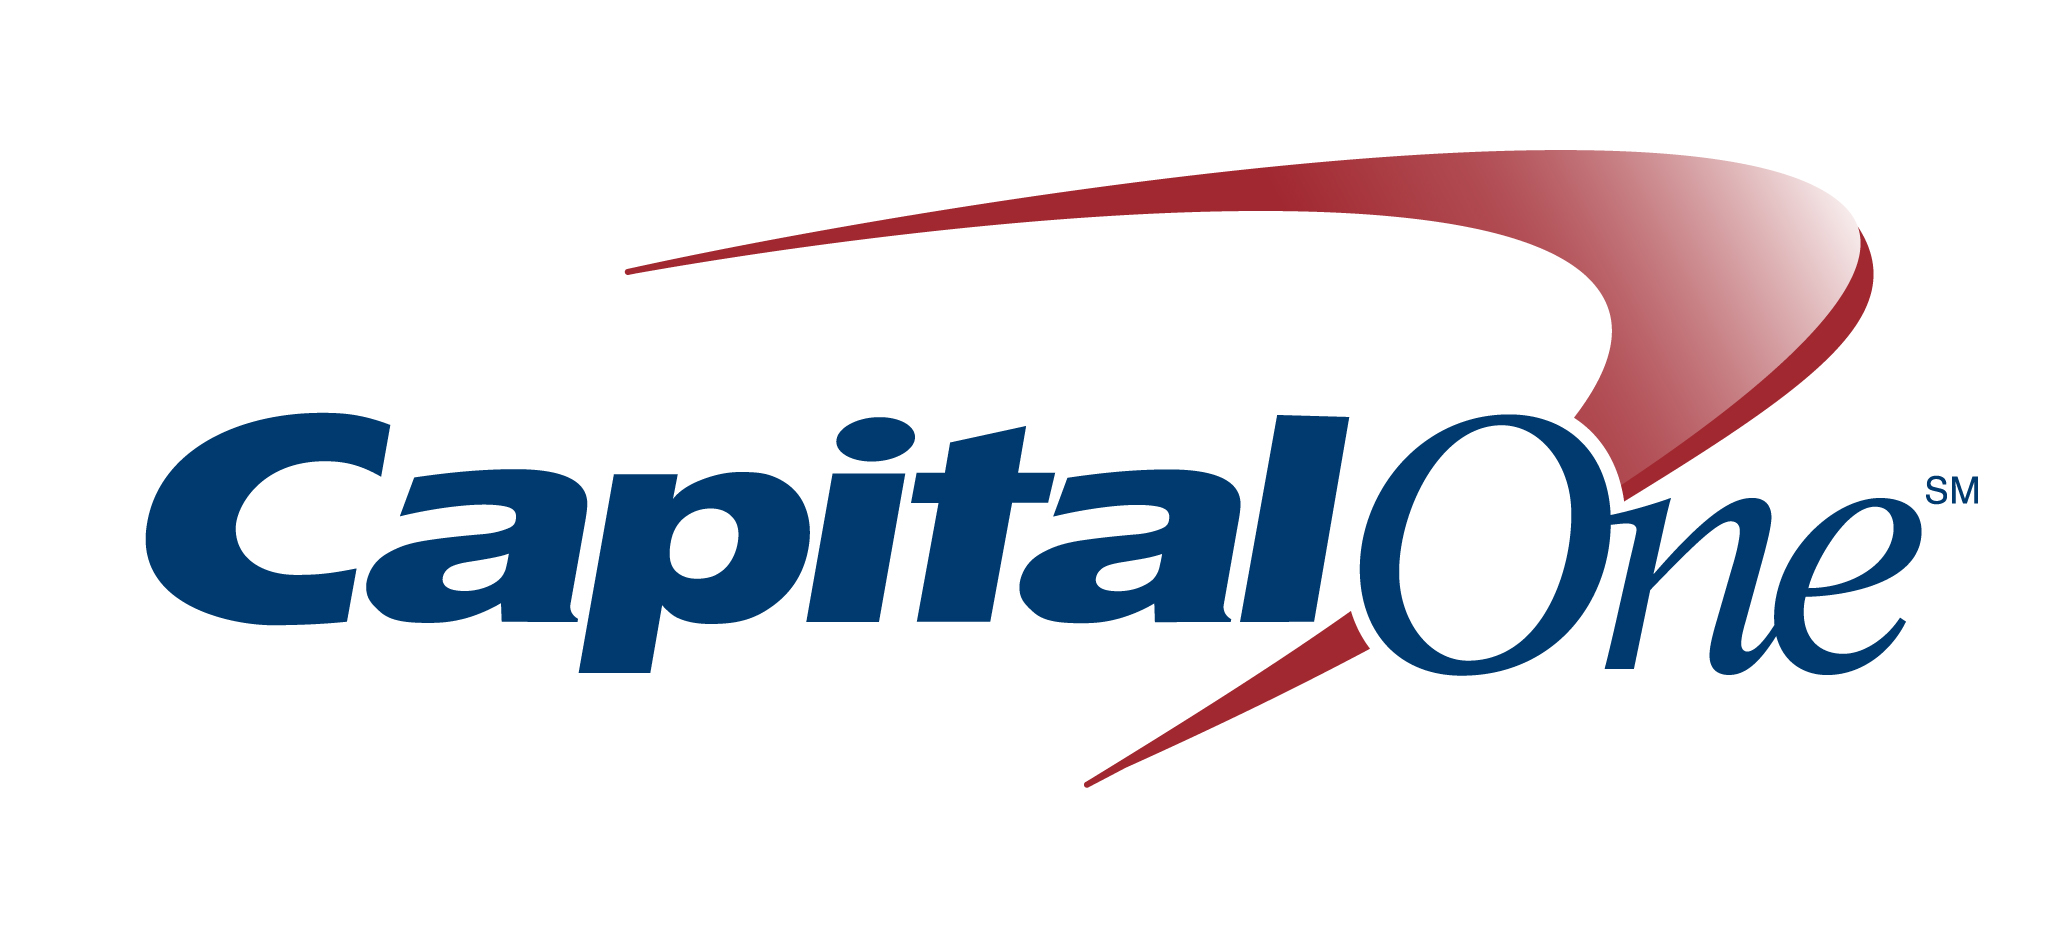 Capital_one_logo.jpg